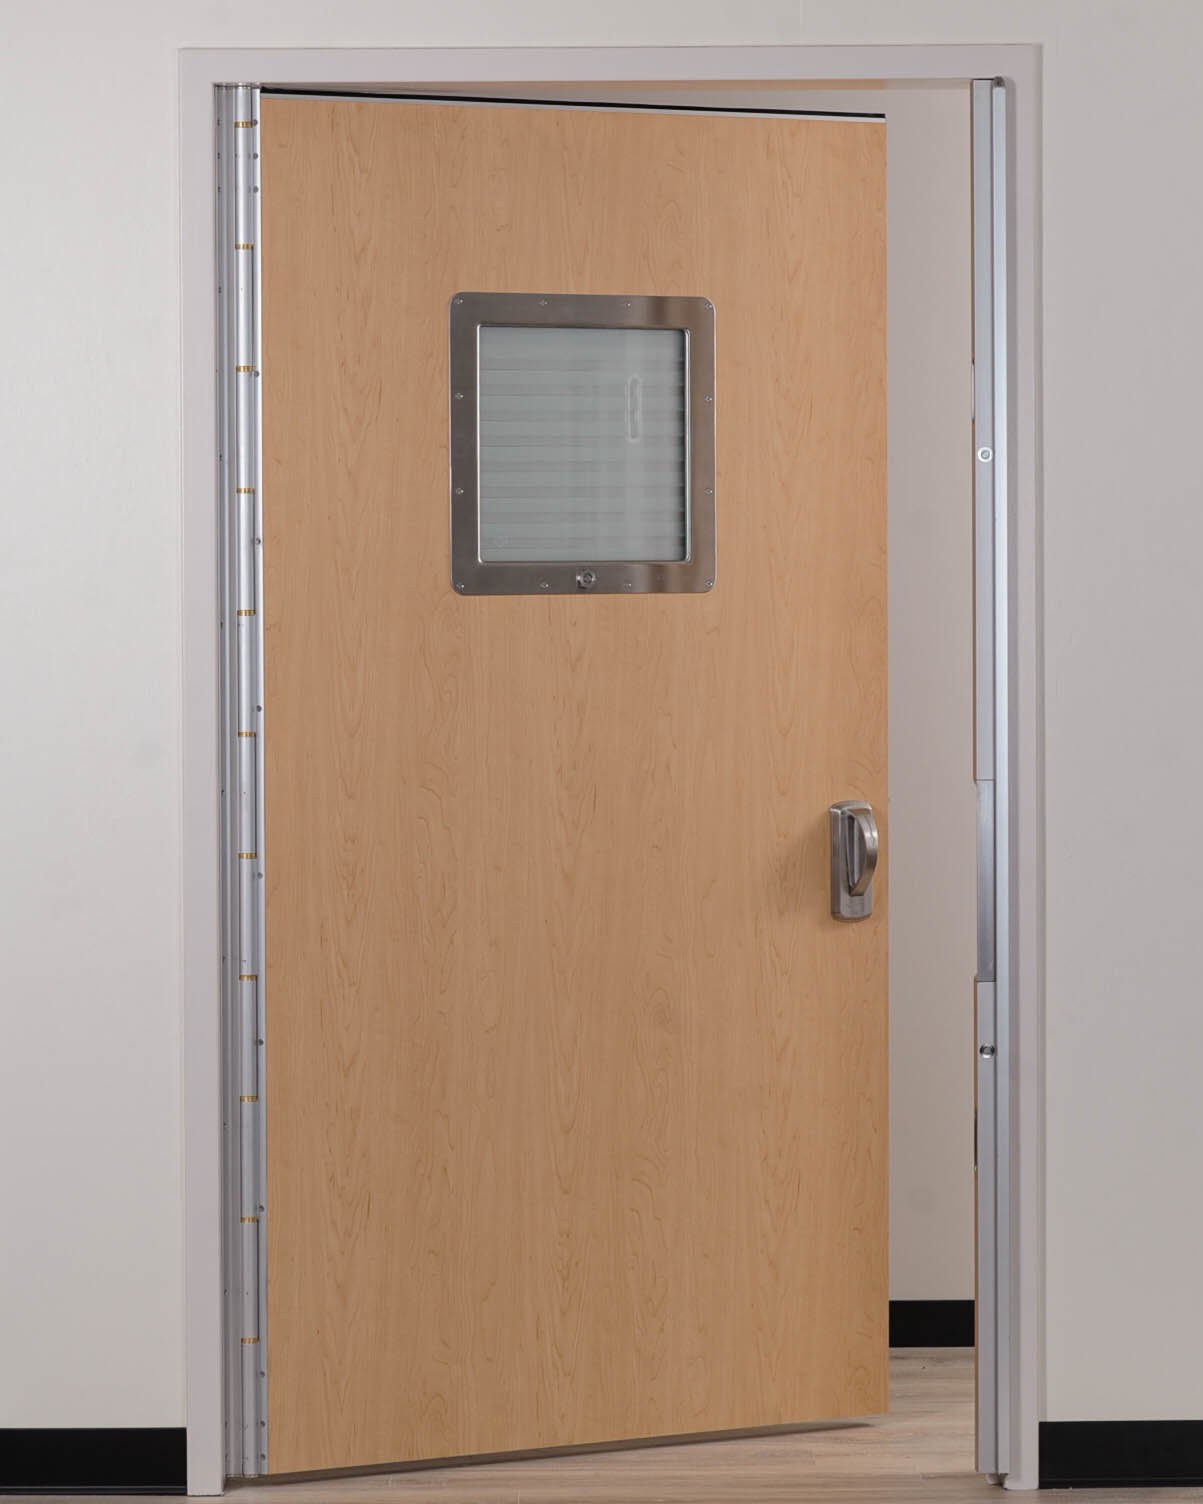 Psychiatric Health Anti Barricade Door.